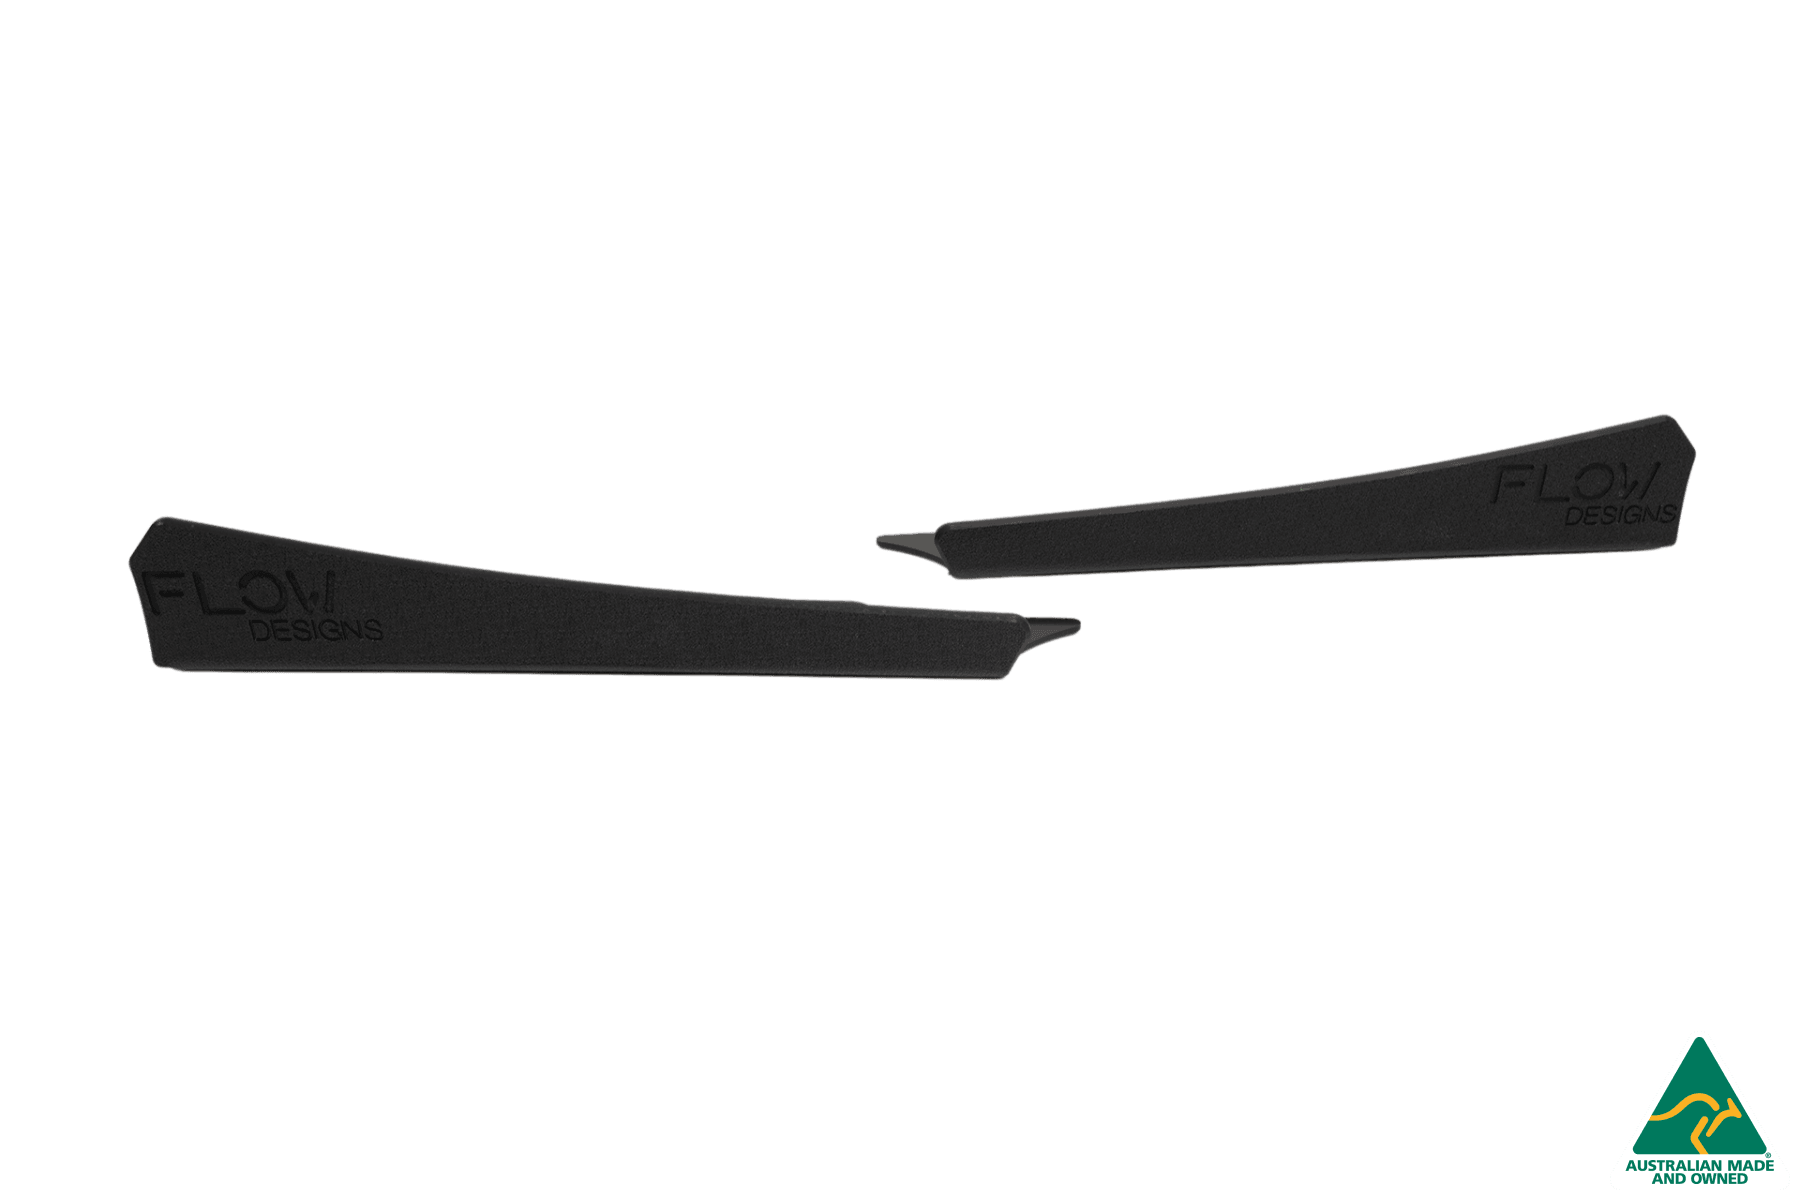 VA WRX & STI Rear Spat Winglets (Pair) - MODE Auto Concepts